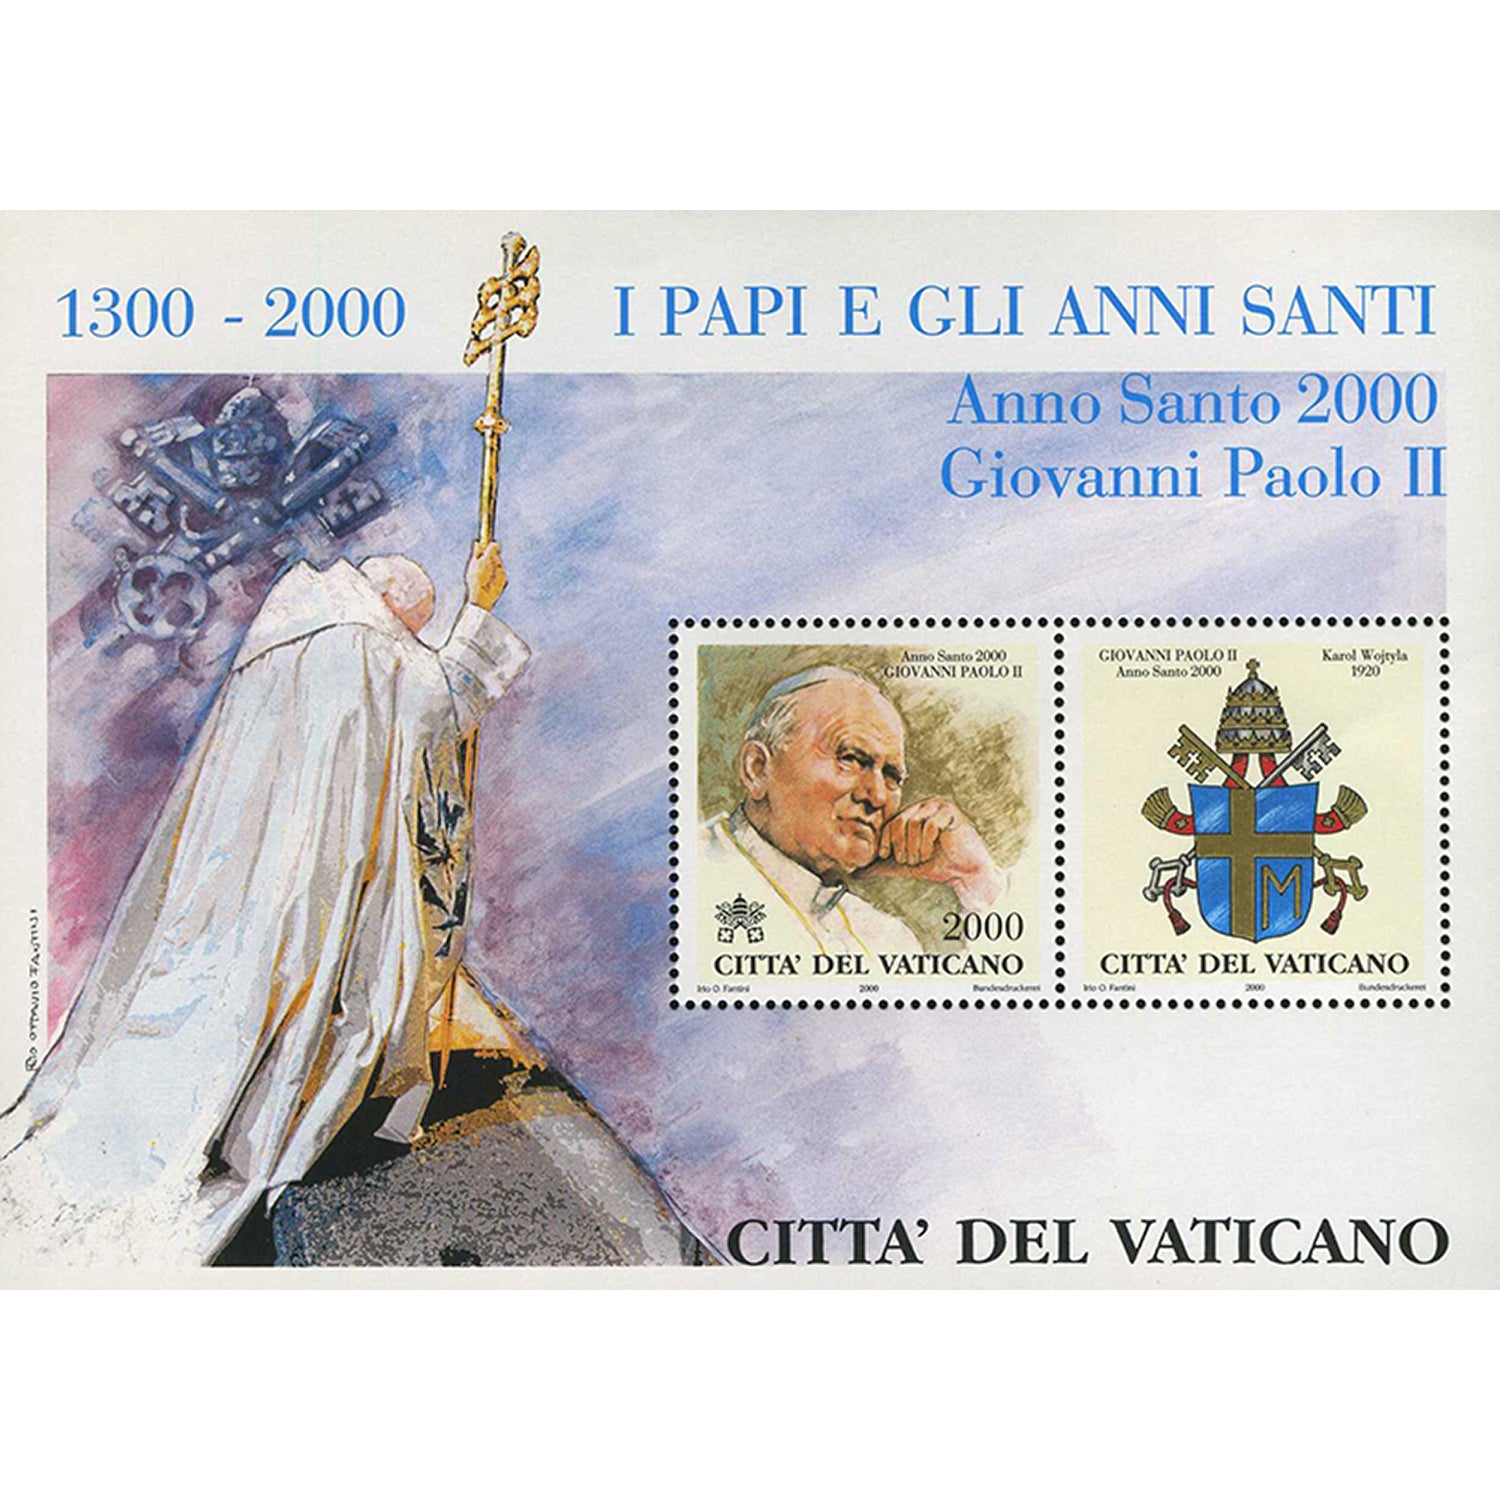 John Paul II Souvenir Sheet of the Holy Year 2000